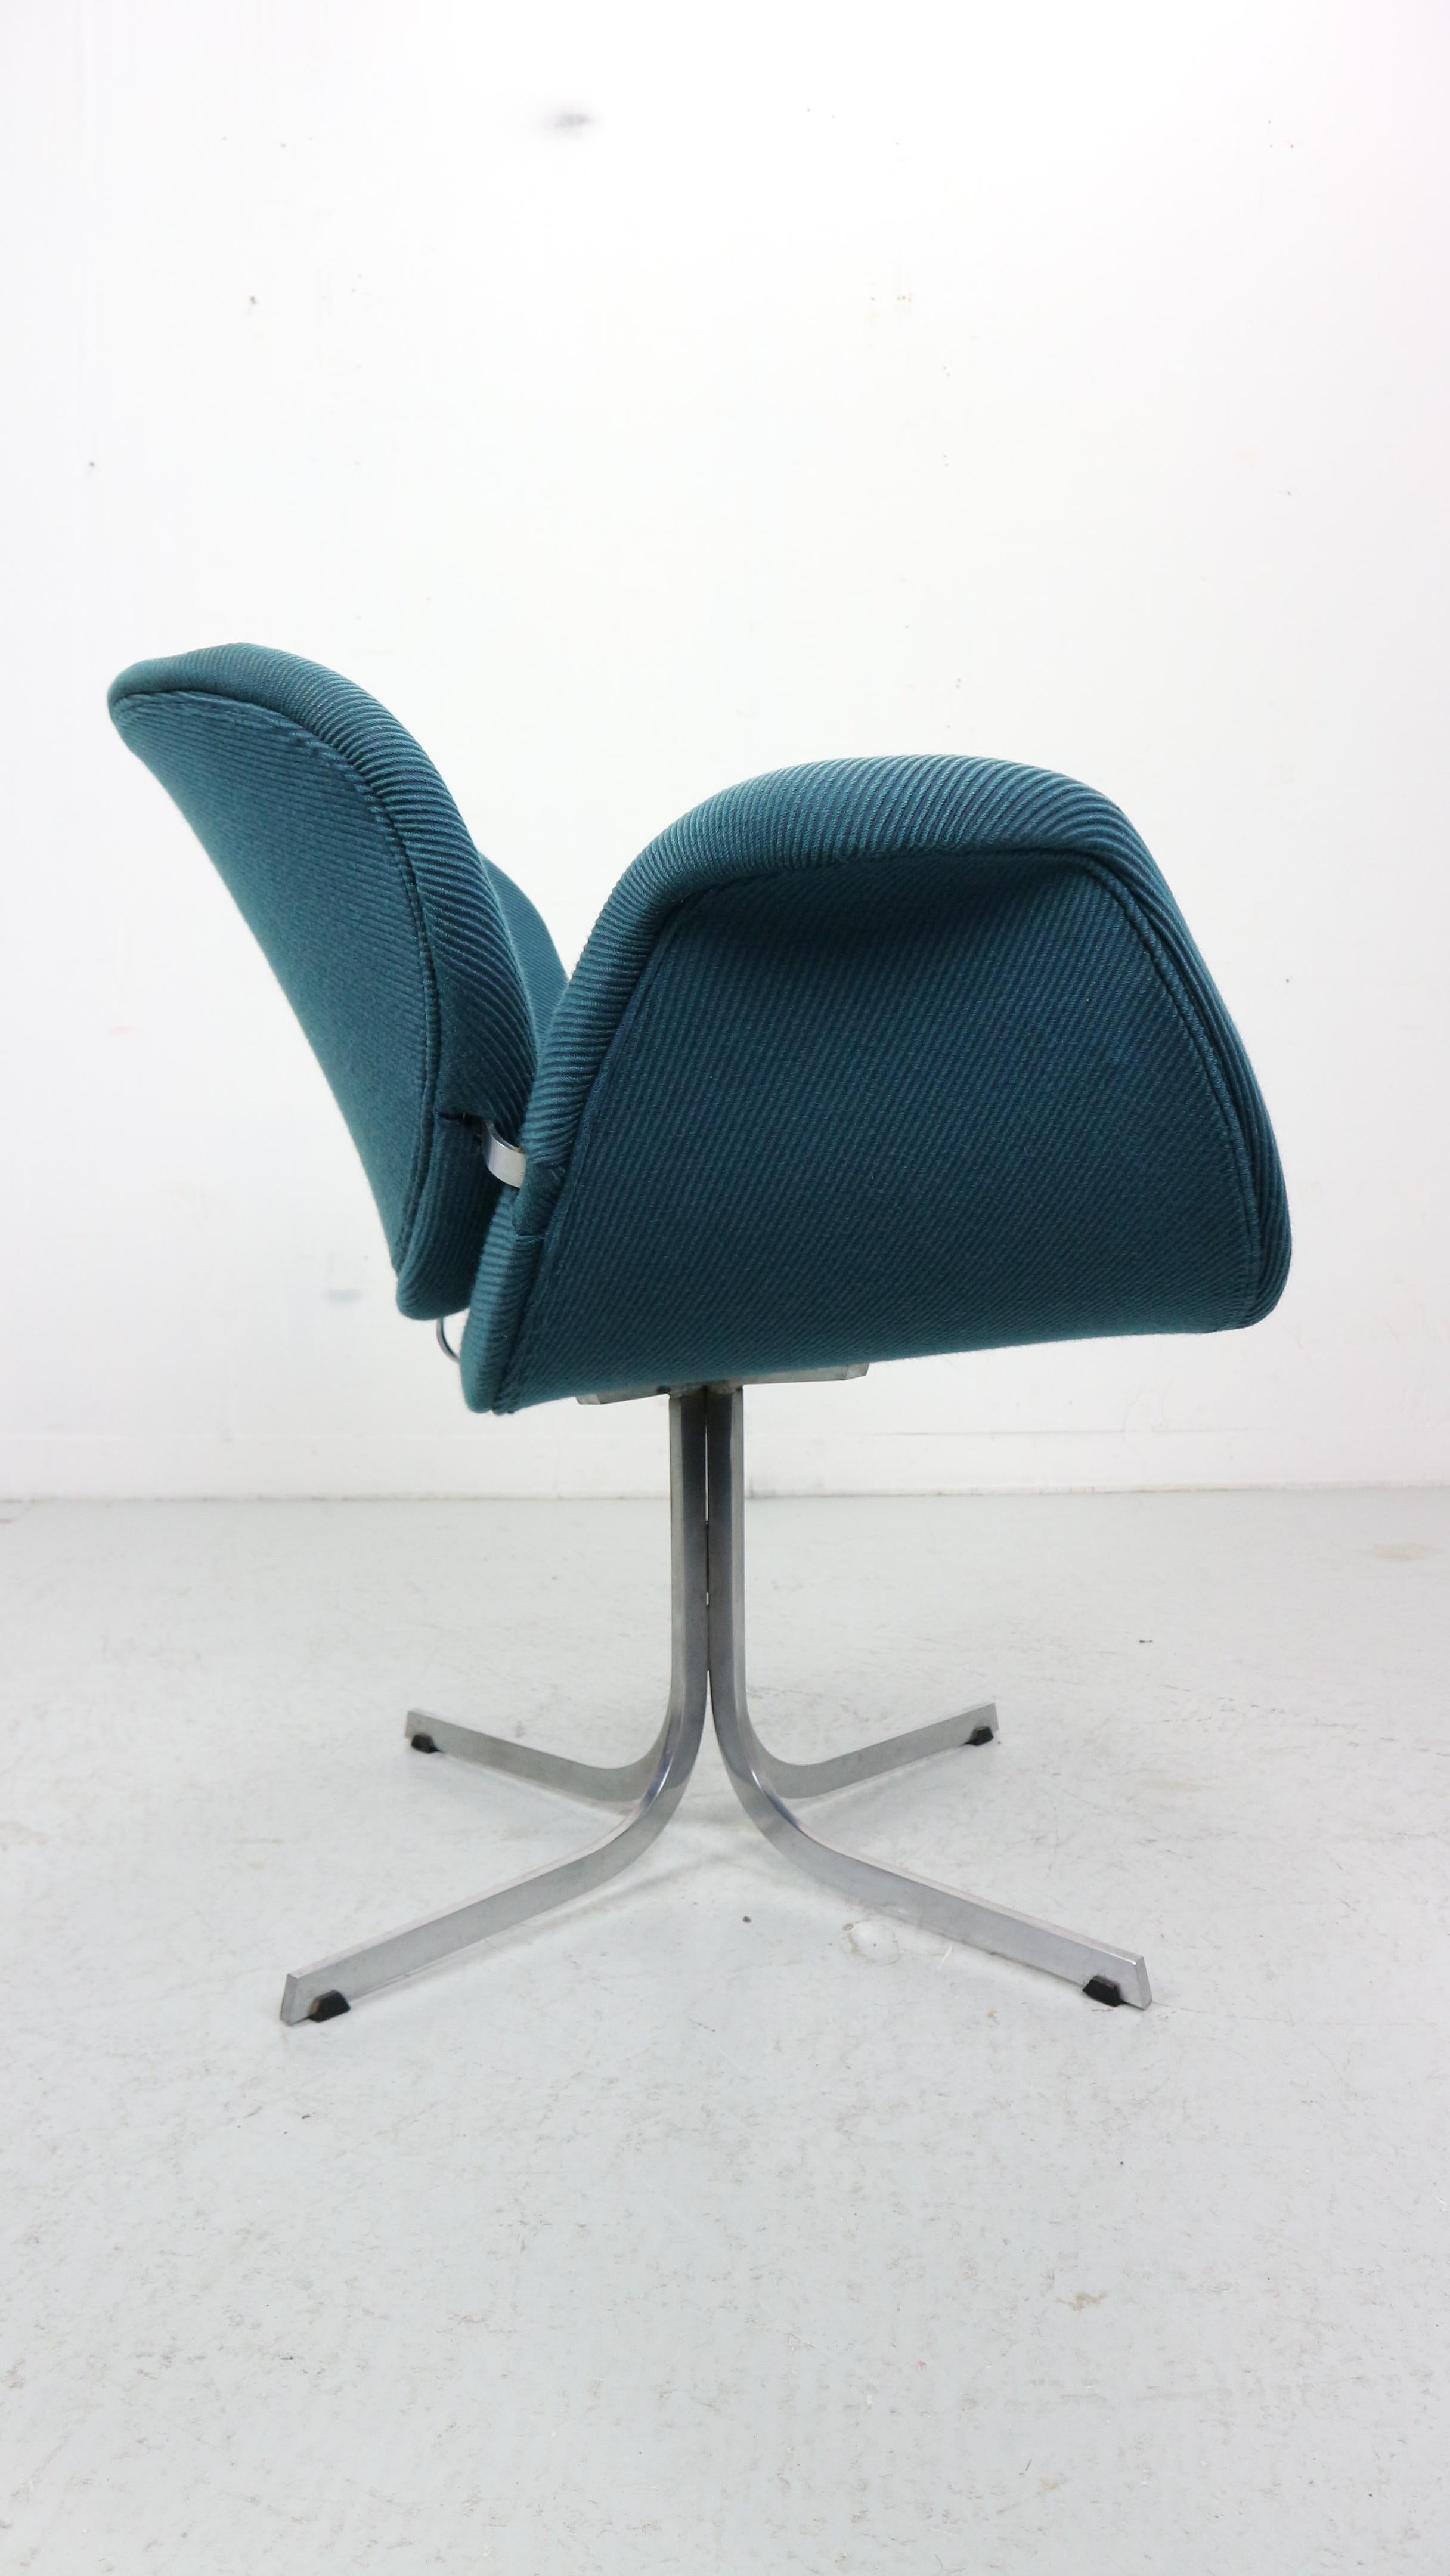 Mid-Century Modern Vintage Pierre Paulin Tulip midi F549 chair 1960s by Artifort, Netherlands